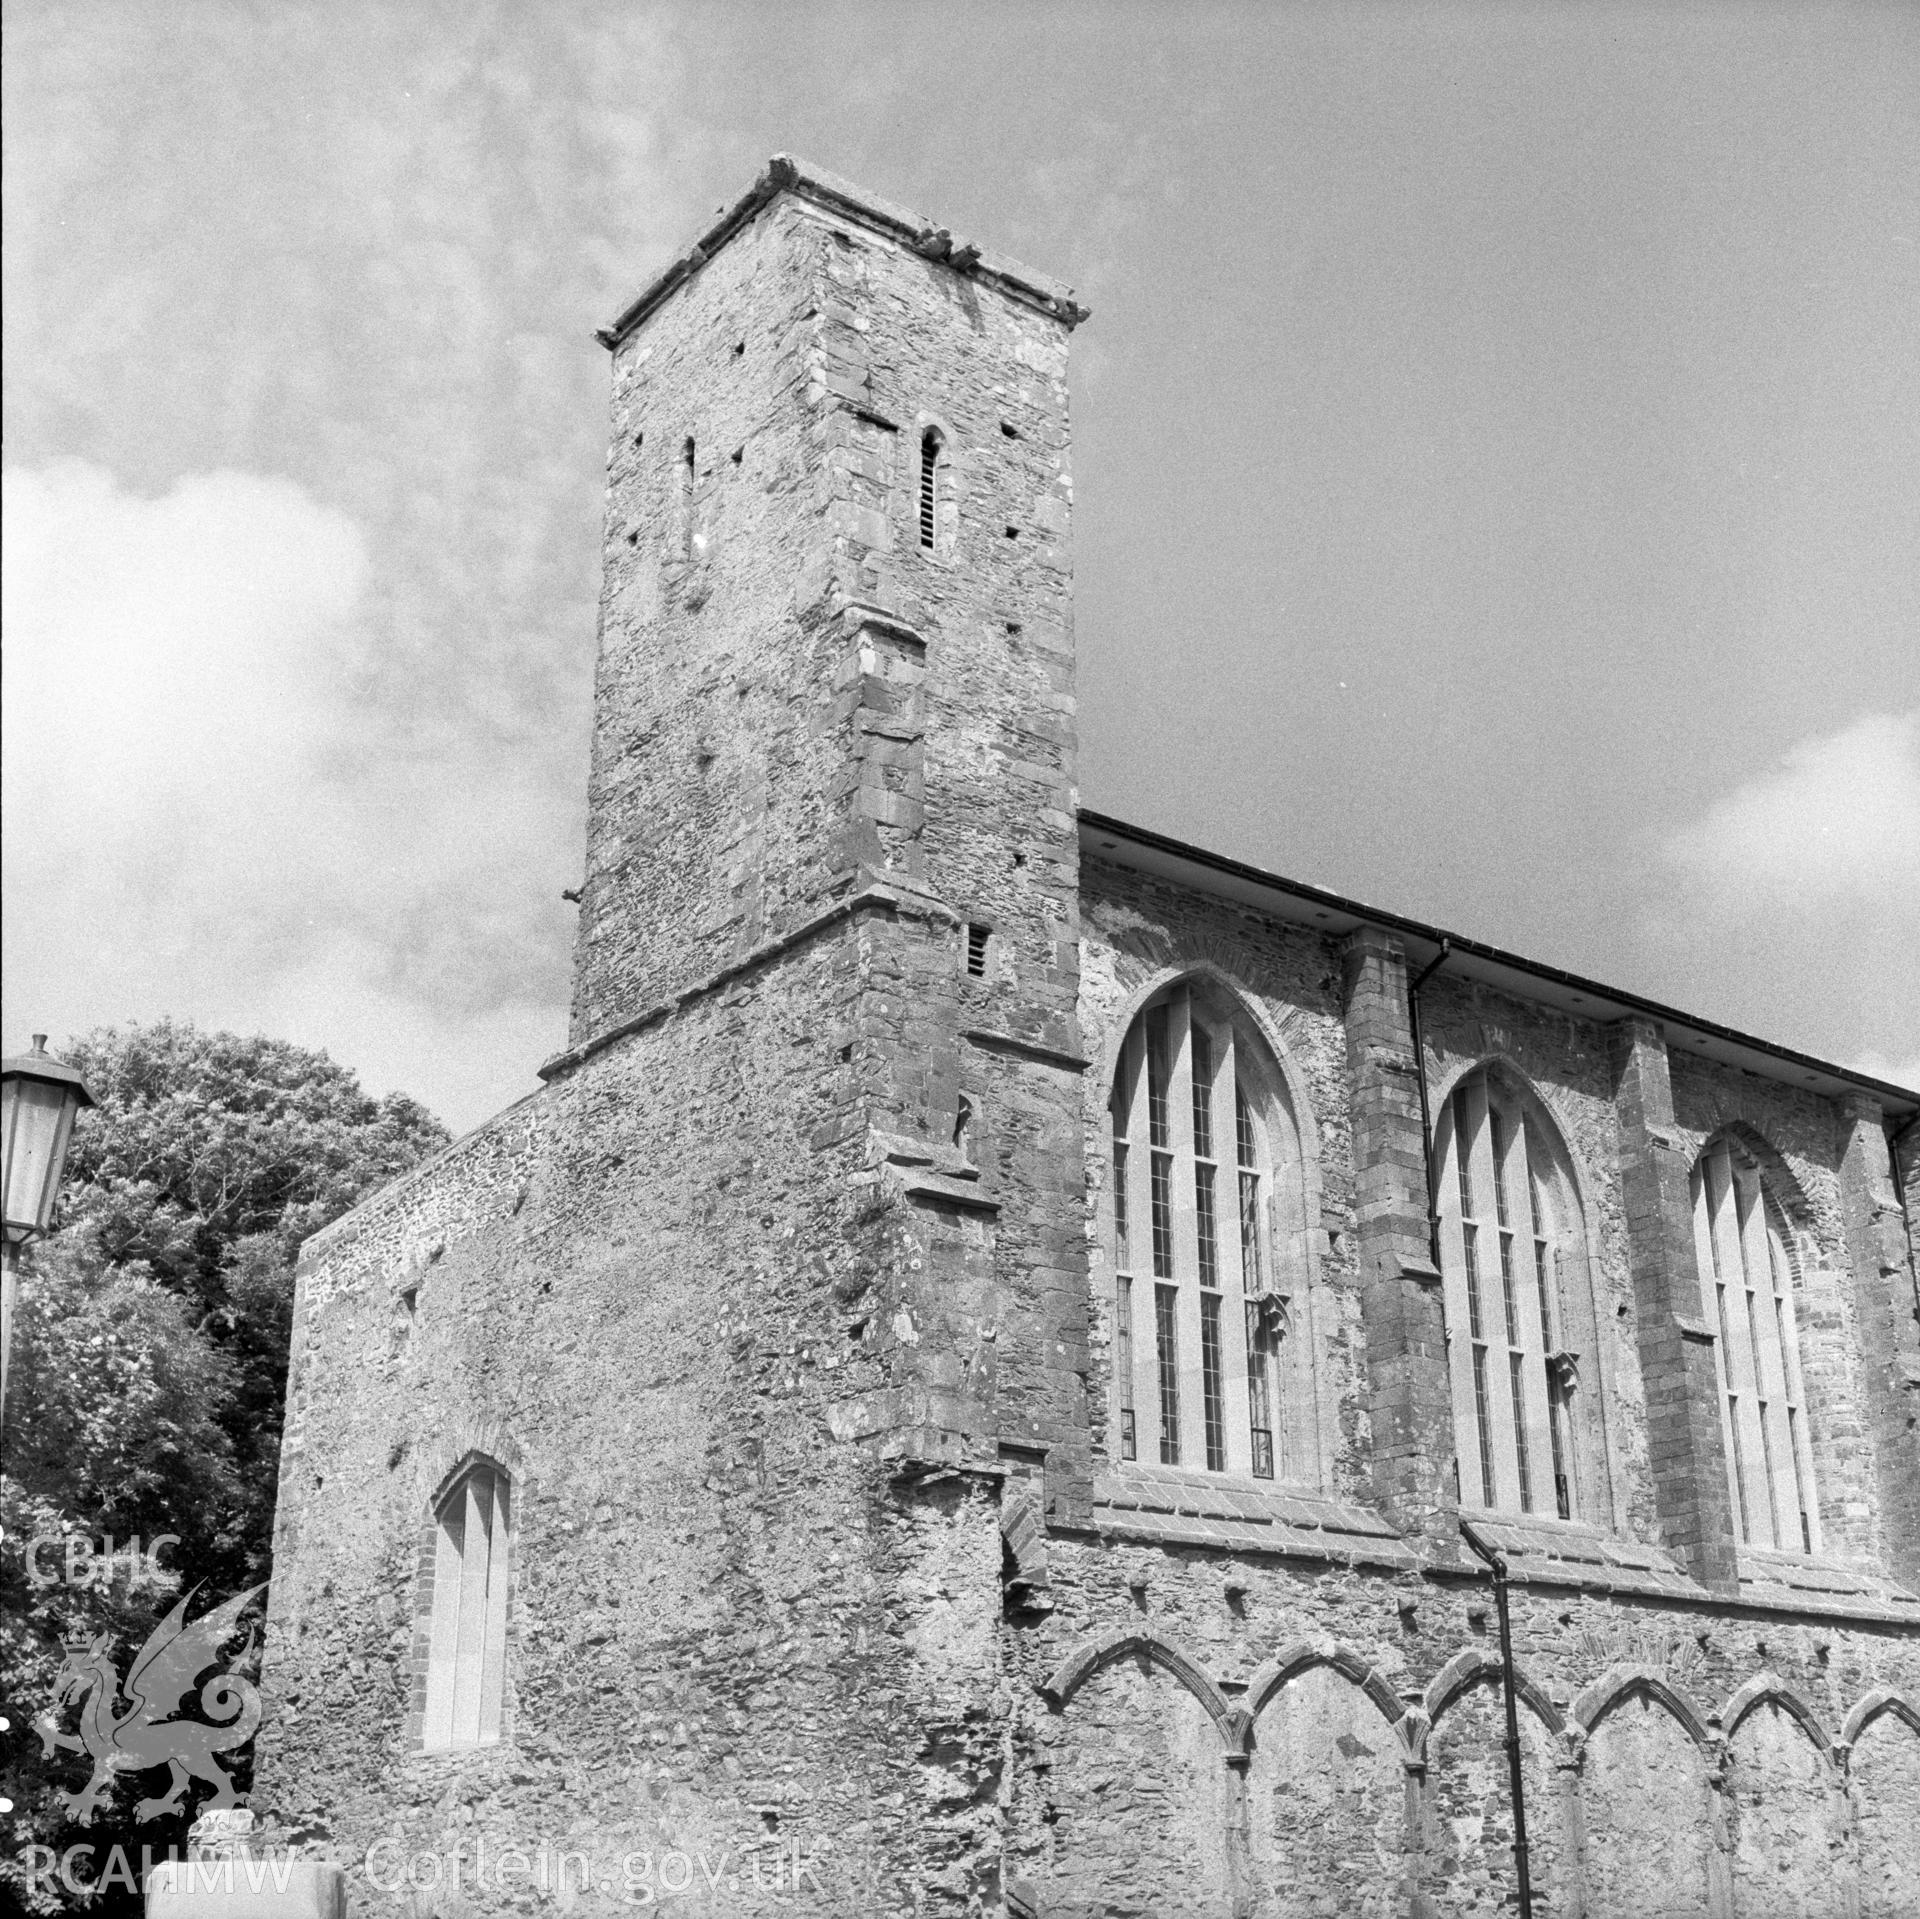 Digital copy of an acetate negative showing Close Wall, St Davids, 13th September 1967.